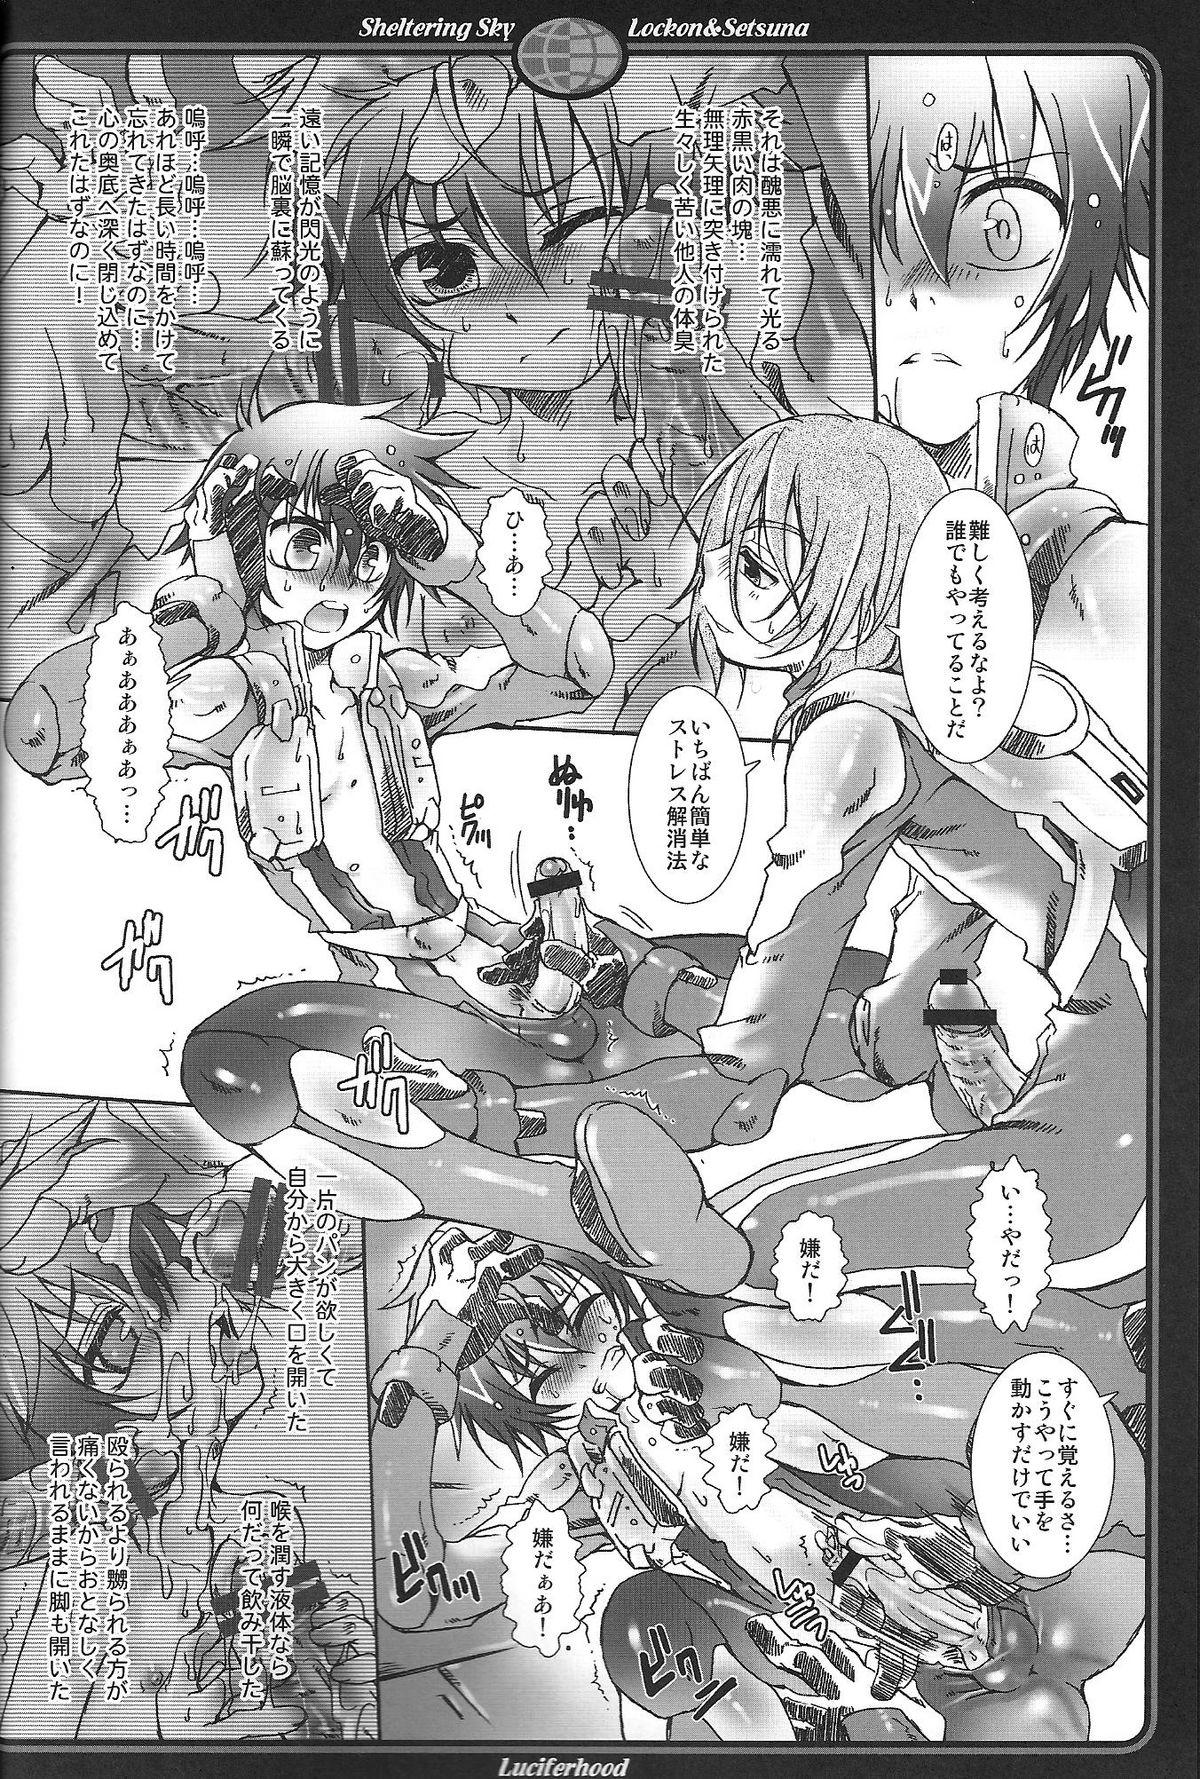 Cut Sheltering Sky - Gundam 00 Humiliation - Page 11